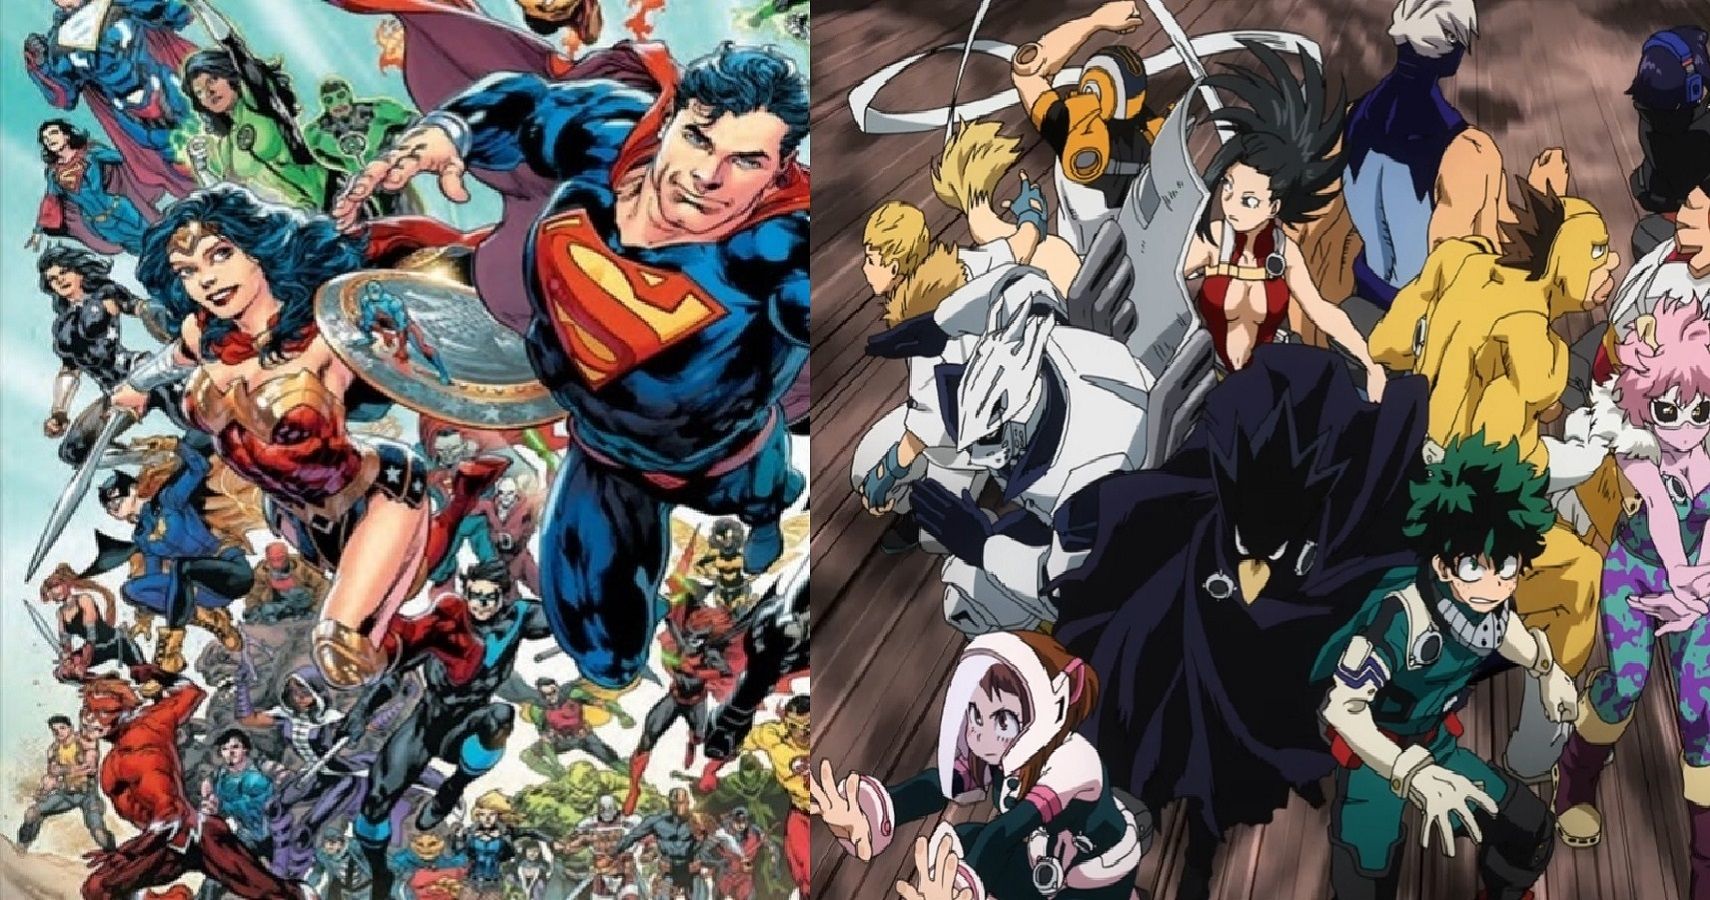 Superhero Anime My Hero Academia Is More Like The Boys Than Shonen Anime,  Cape Comics - GameSpot